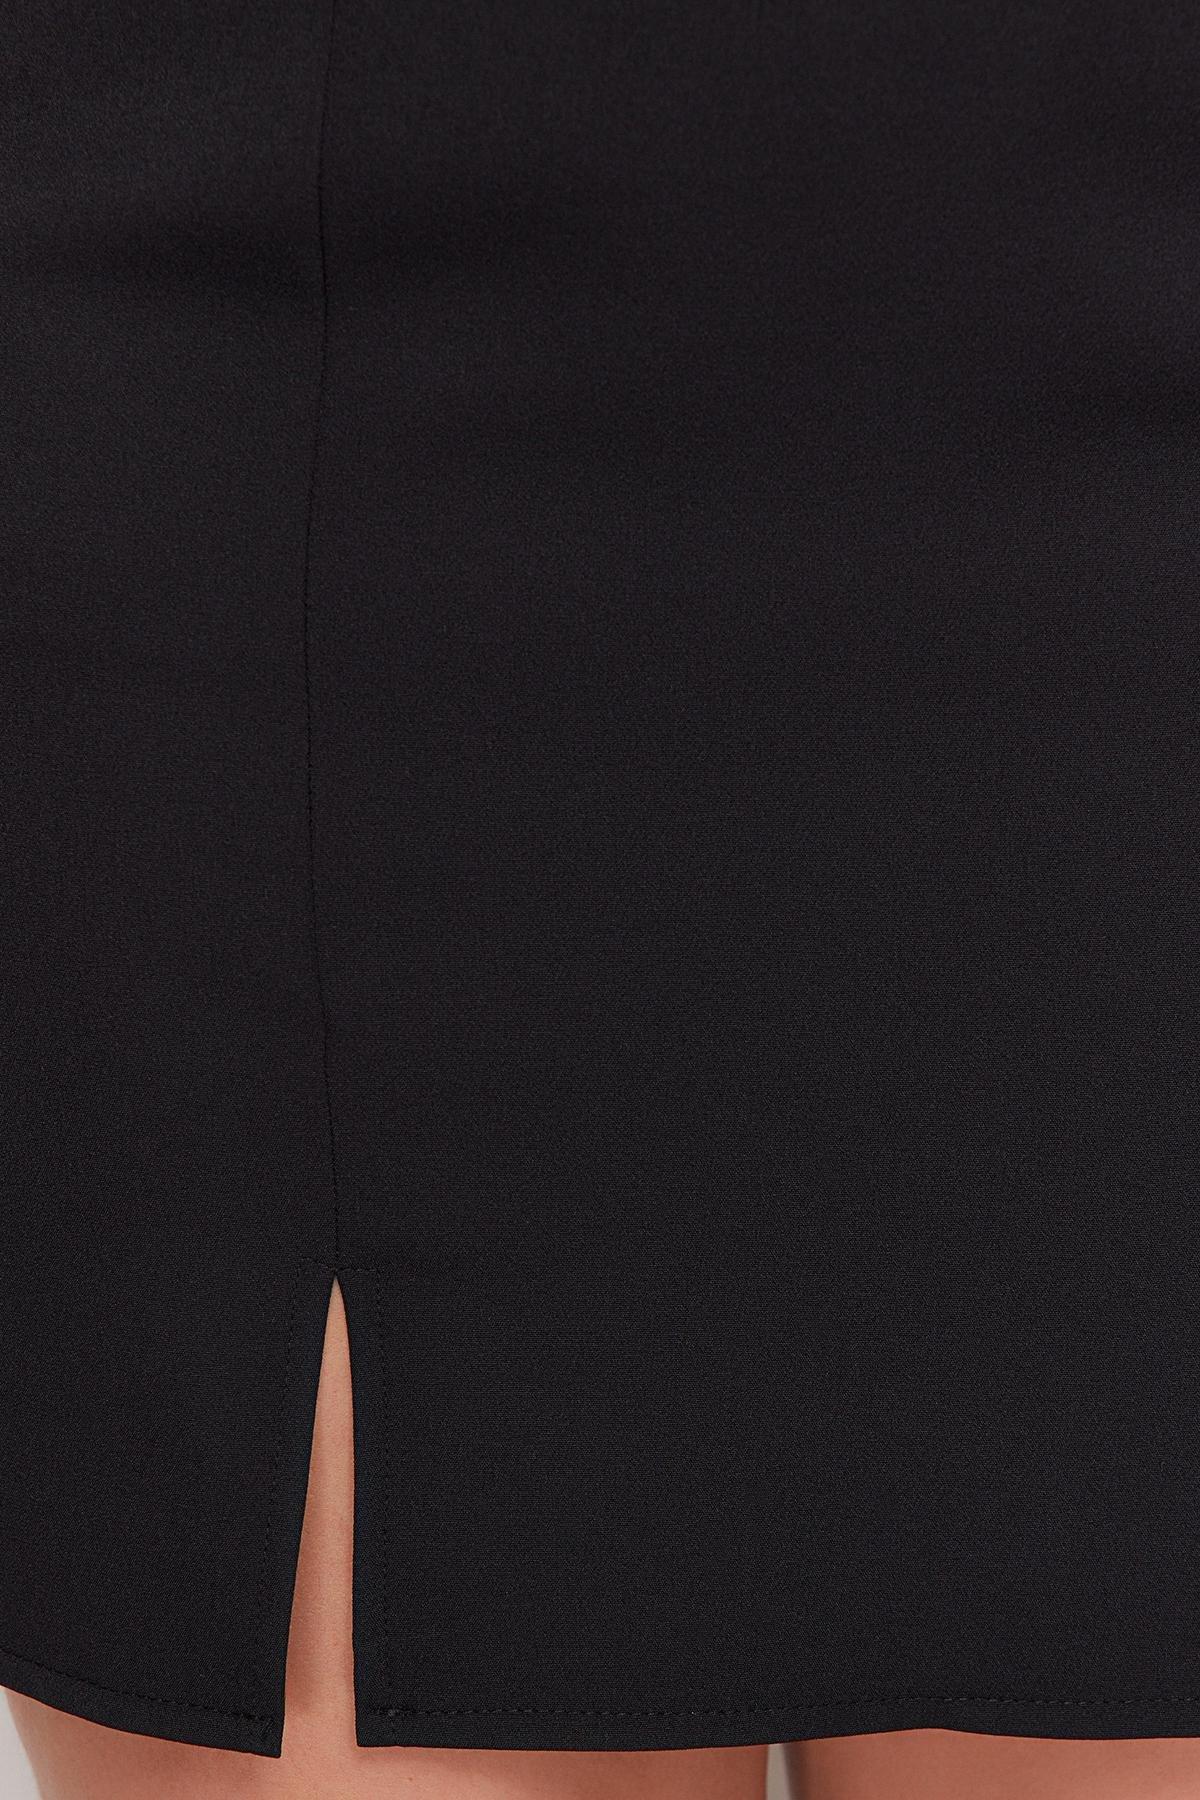 Trendyol - Black Mini Plus Size Skirt